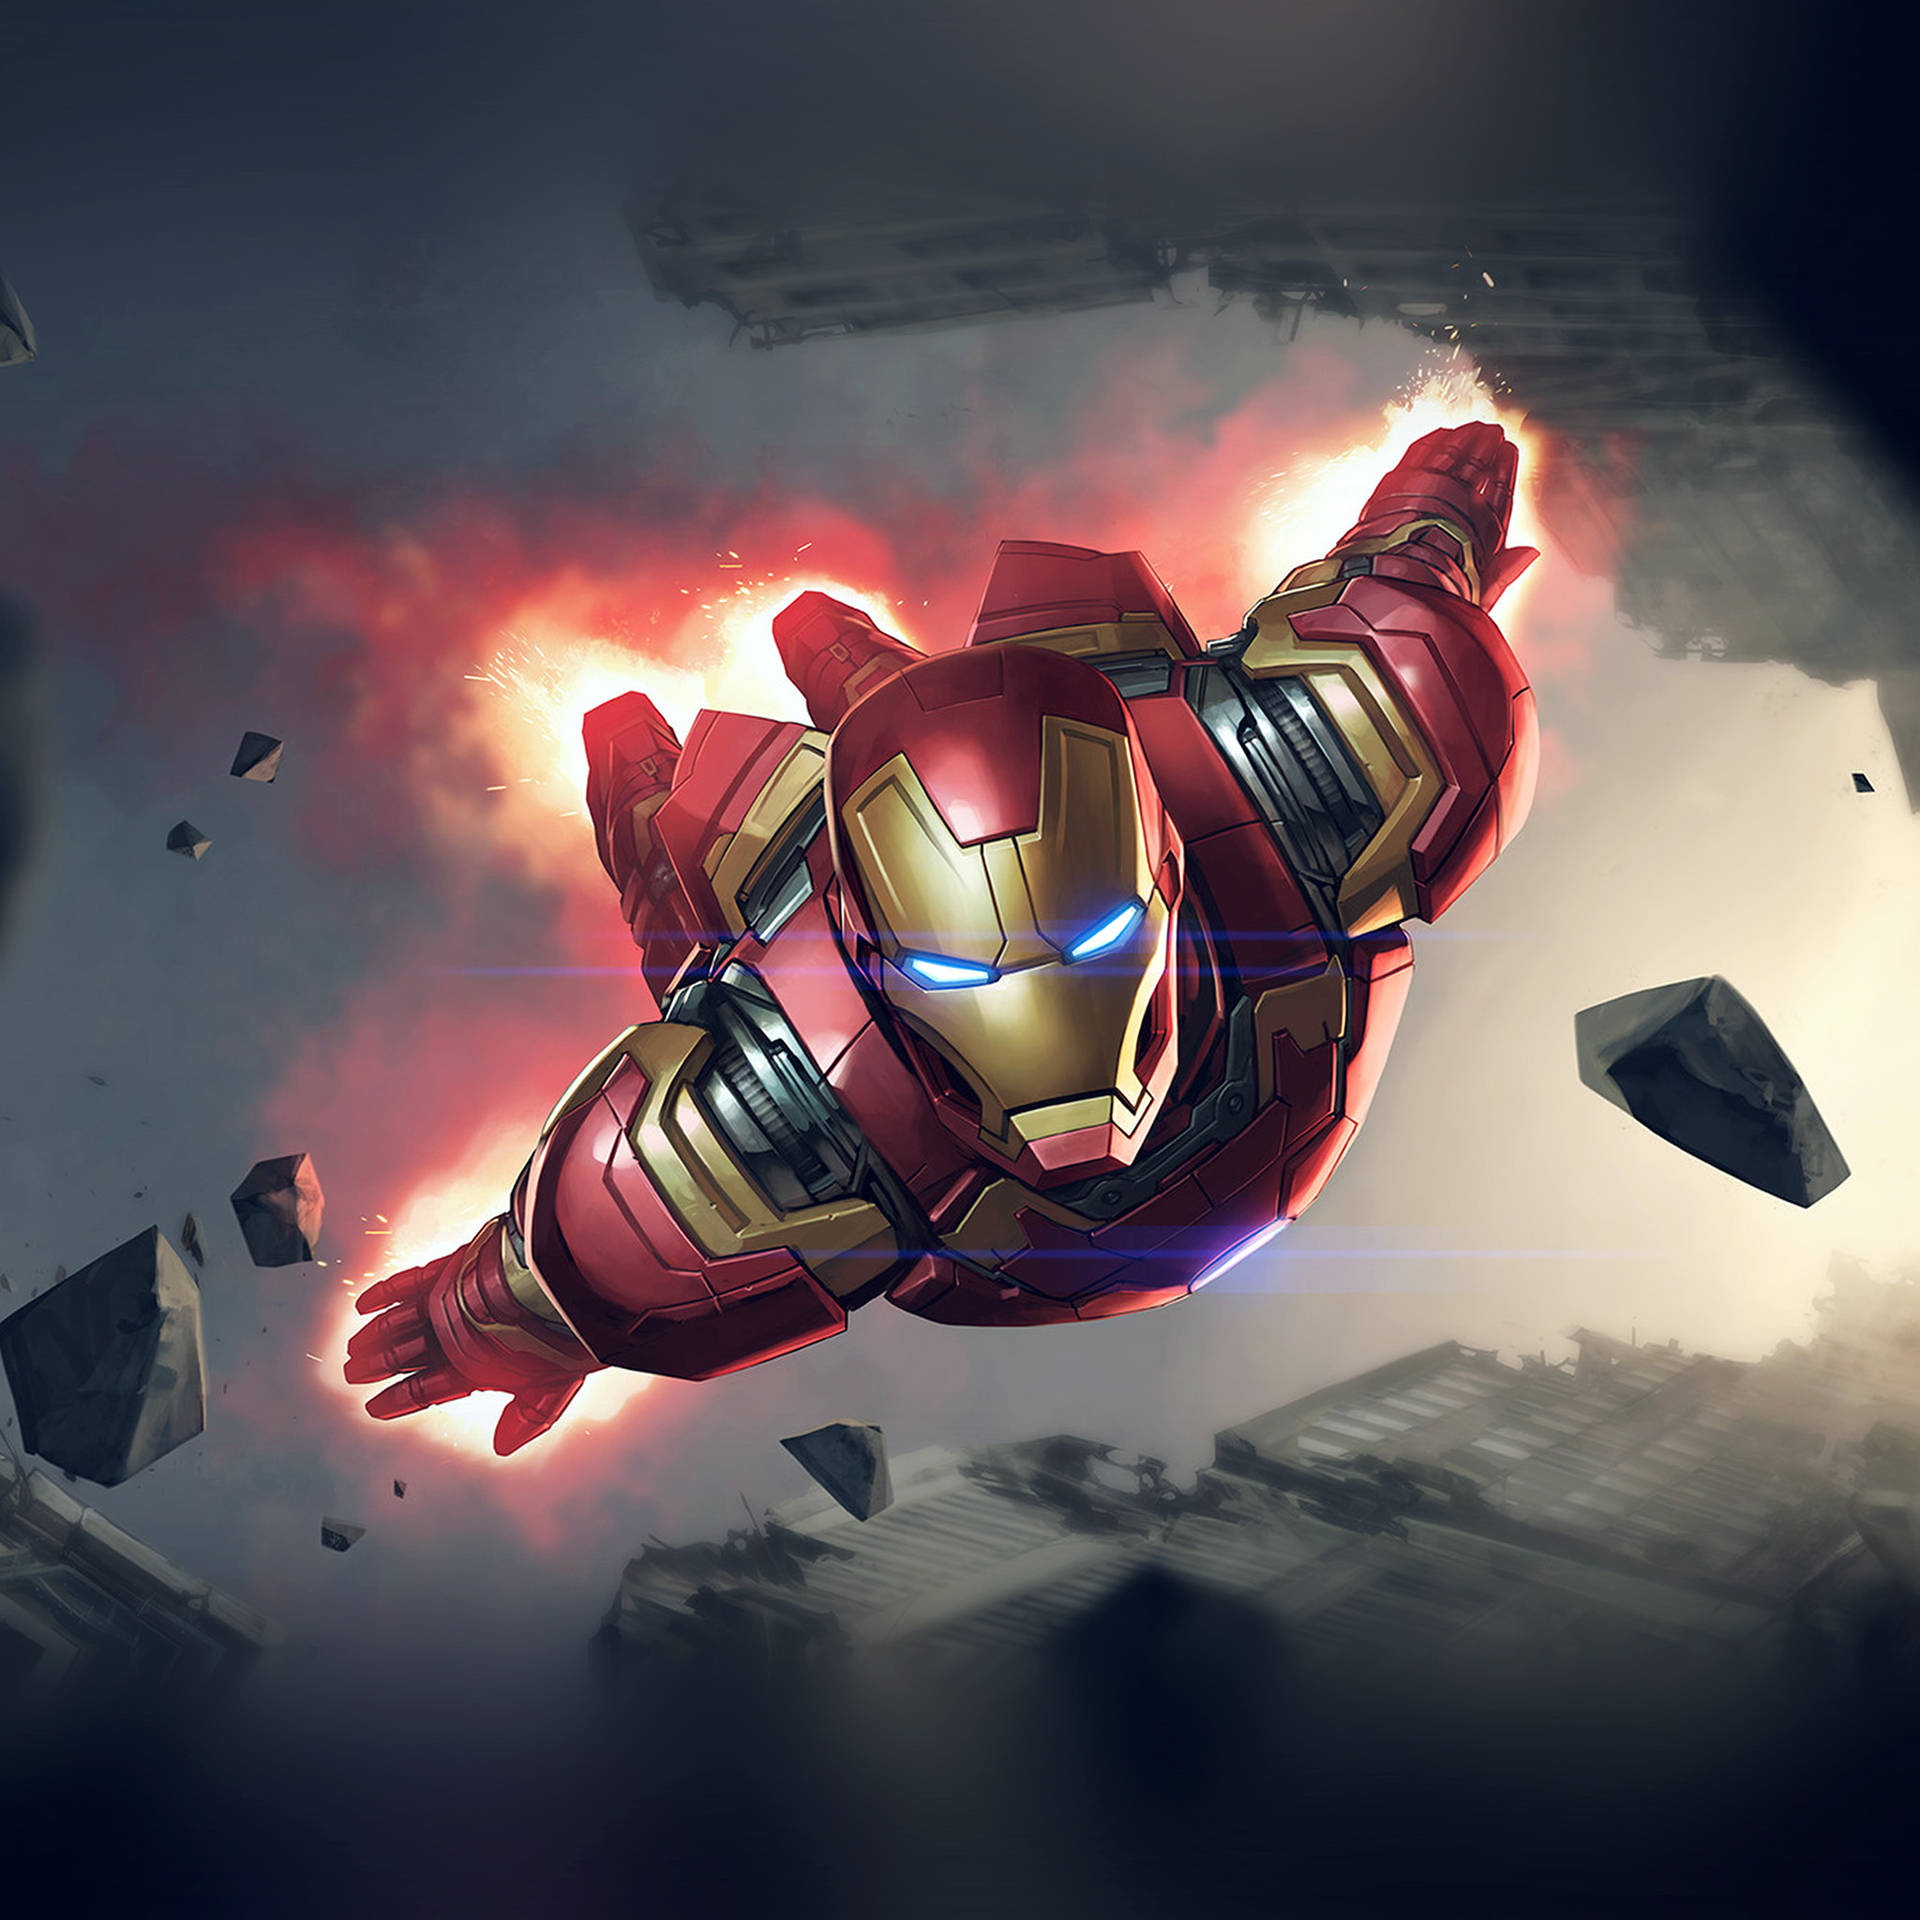 Volandocome Il Supereroe Iron Man Degli Avengers Marvel. Sfondo